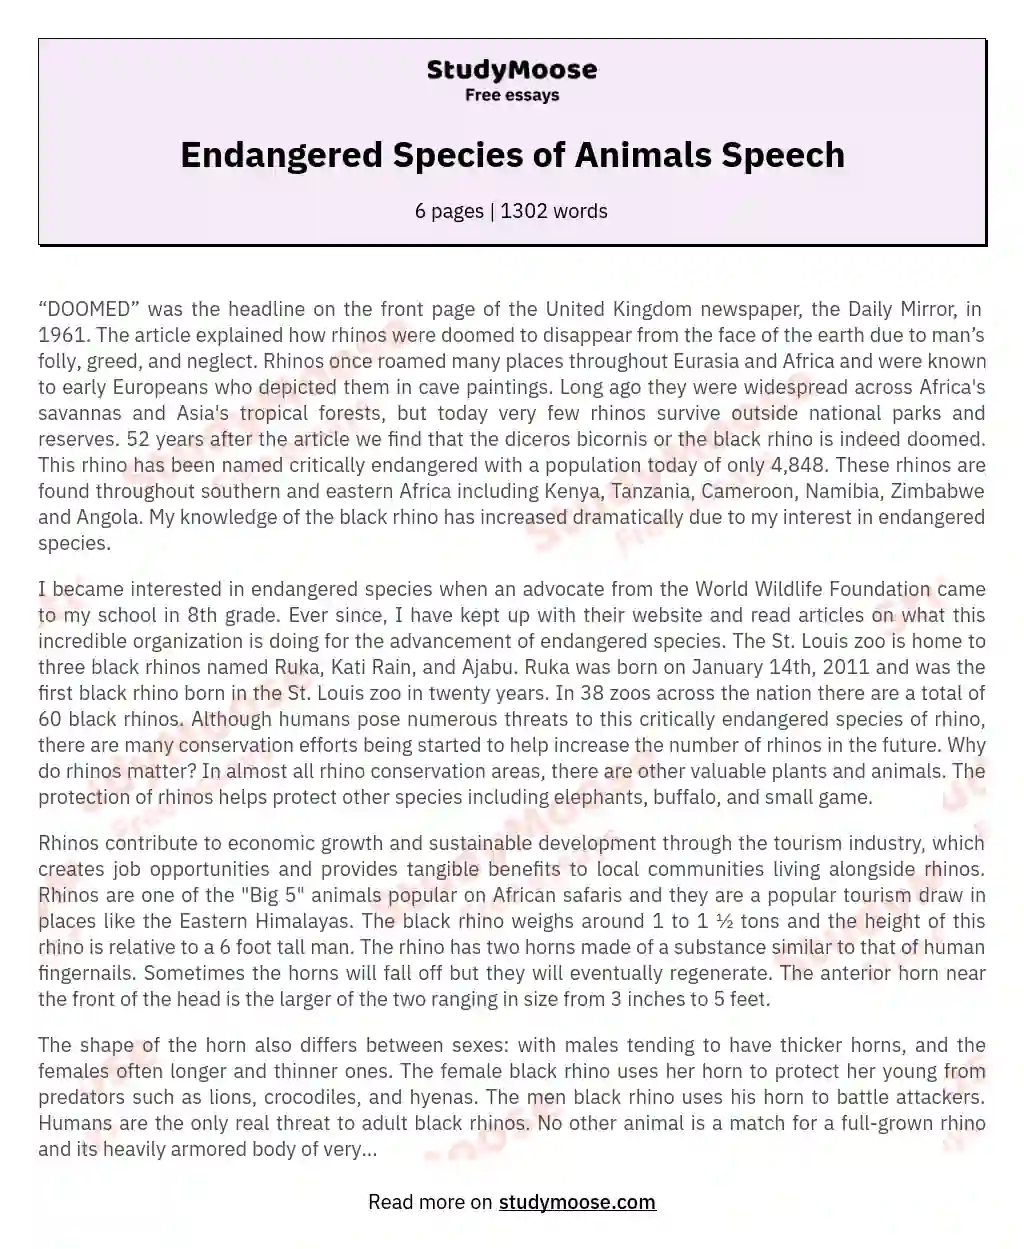 Endangered Species of Animals Speech essay